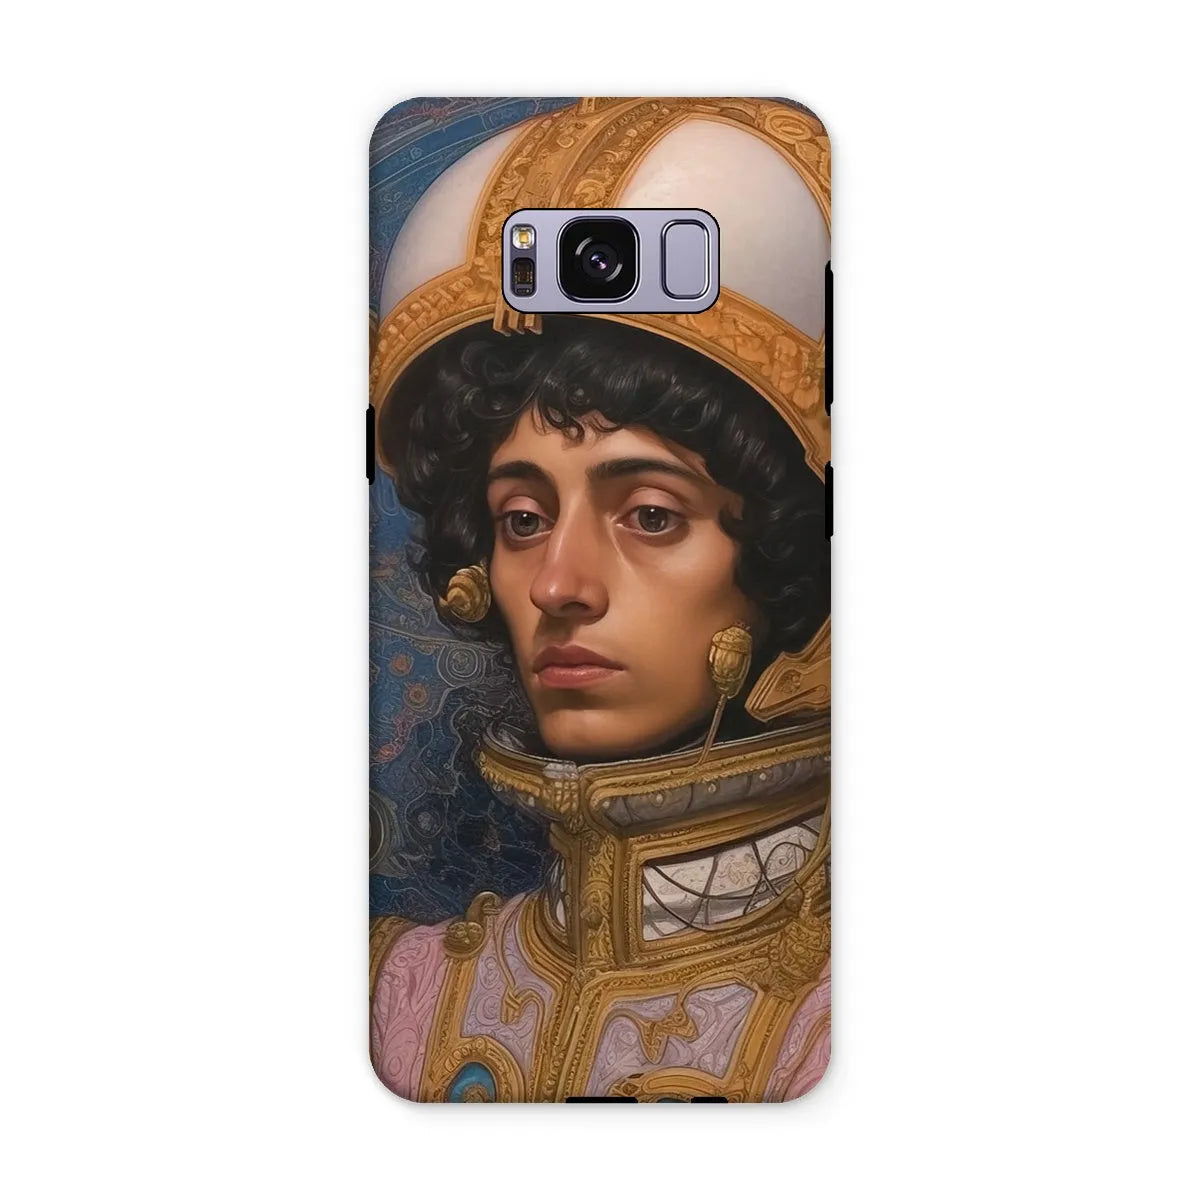 Samir The Gay Astronaut - Lgbtq Art Phone Case - Samsung Galaxy S8 Plus / Matte - Mobile Phone Cases - Aesthetic Art